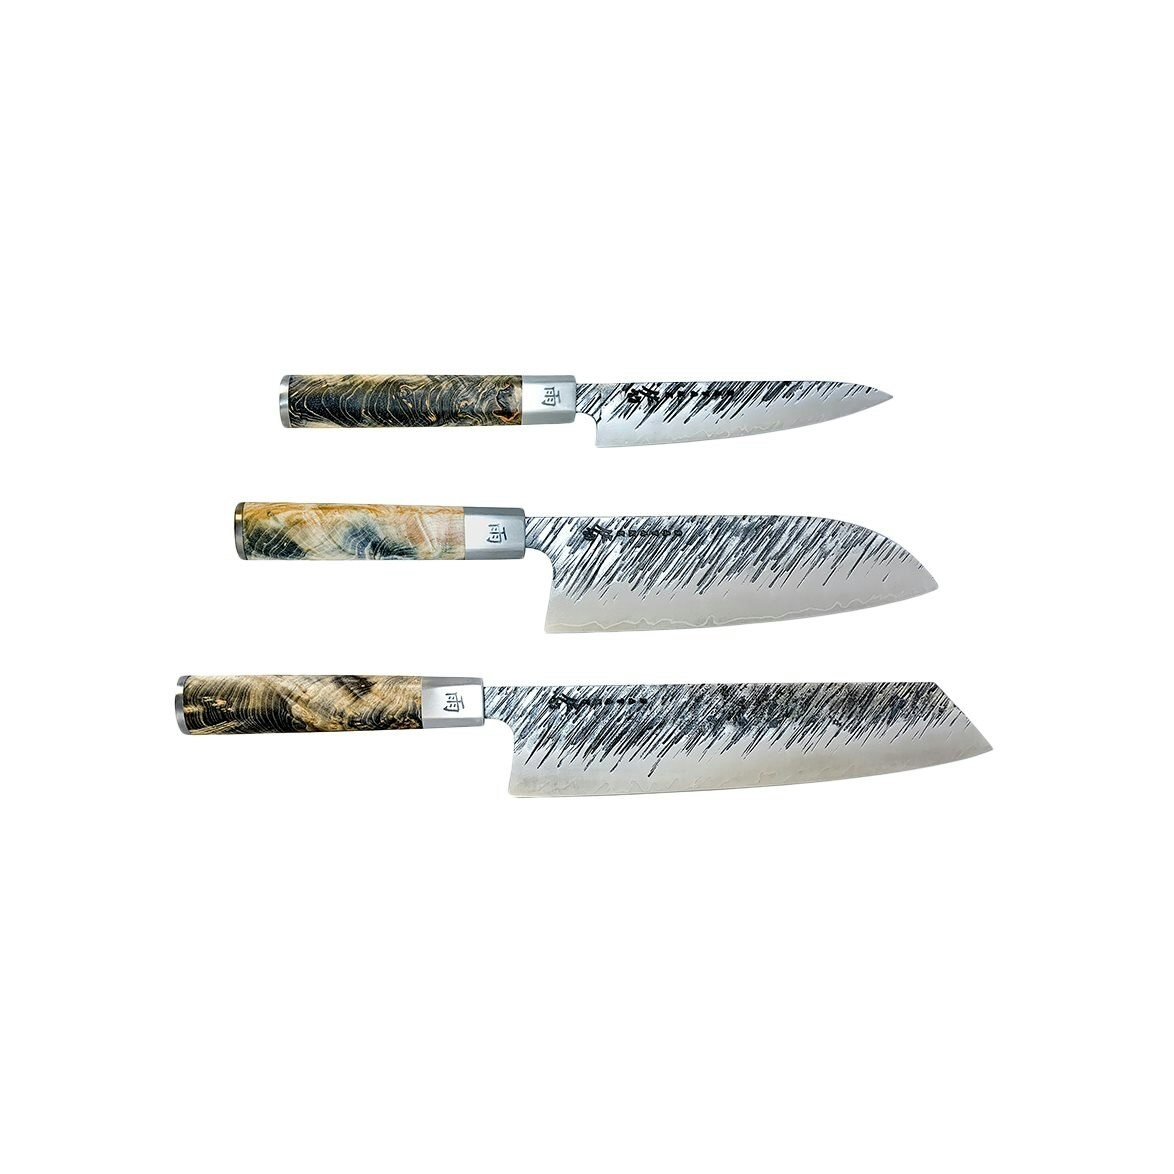 https://royaldesign.com/image/2/satake-ame-knife-set-petty-santoku-kiritsuke-3-pieces-0